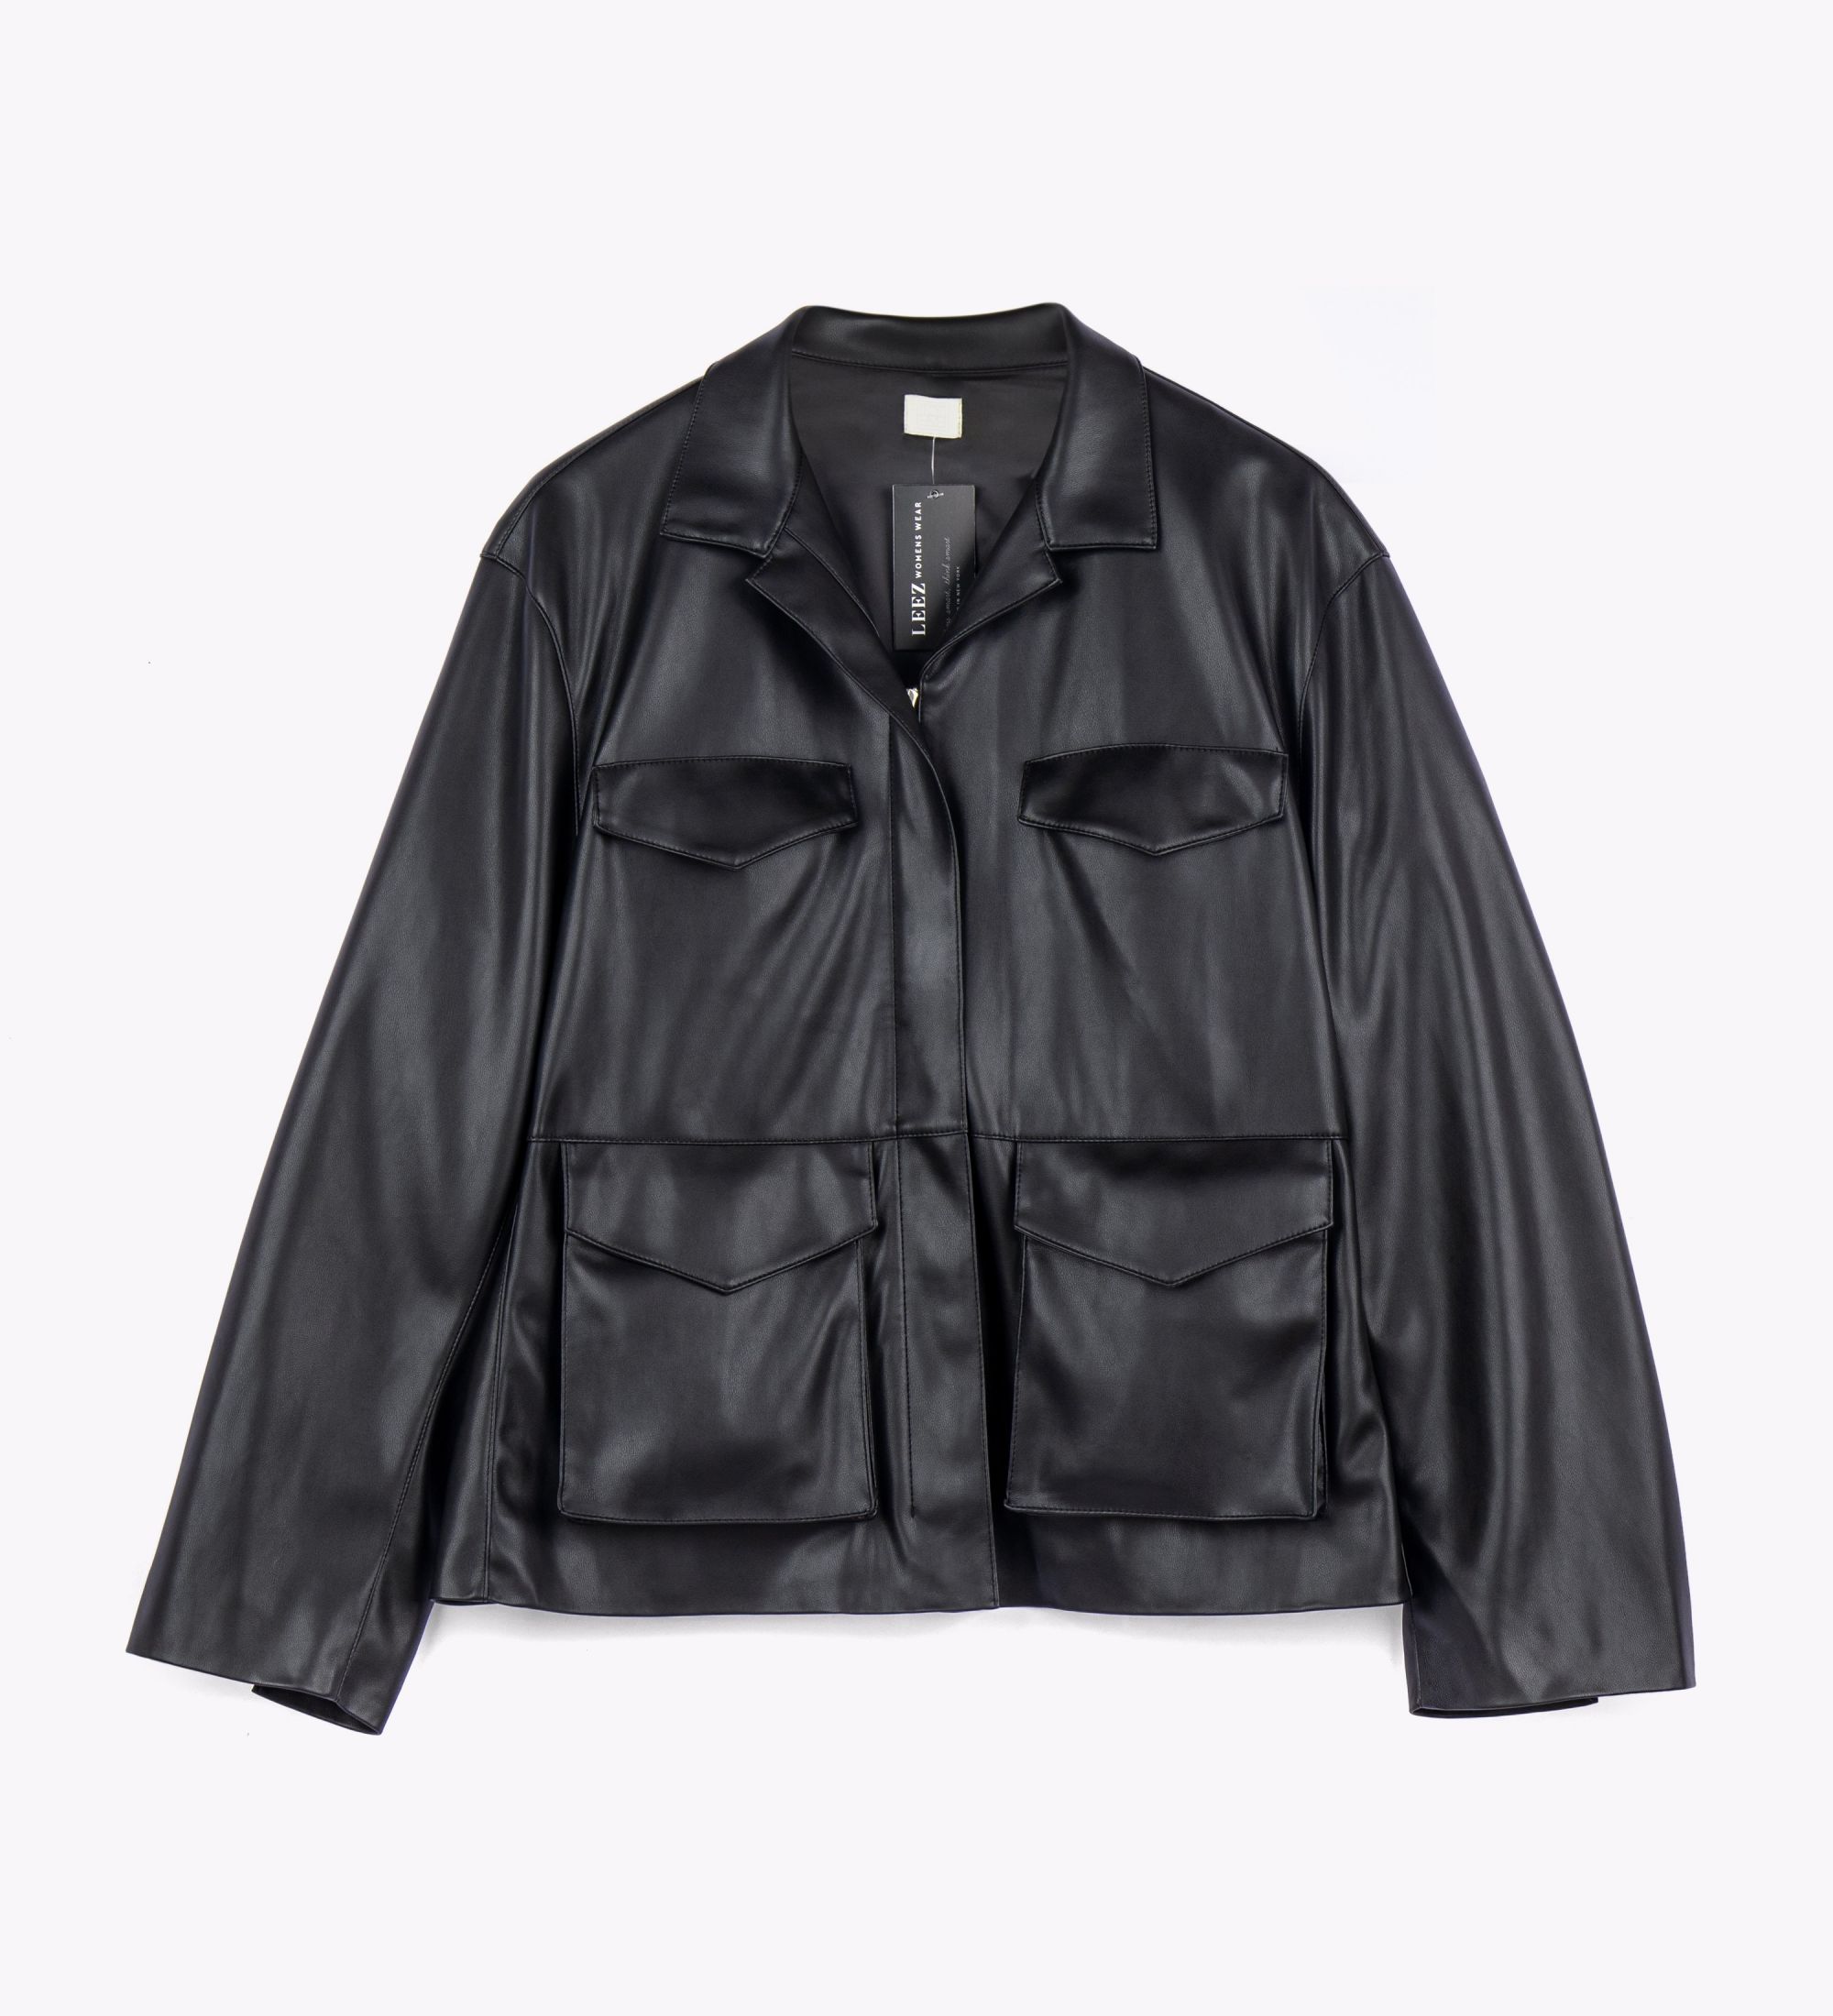 LEEZ Women Leather Jacket - Black